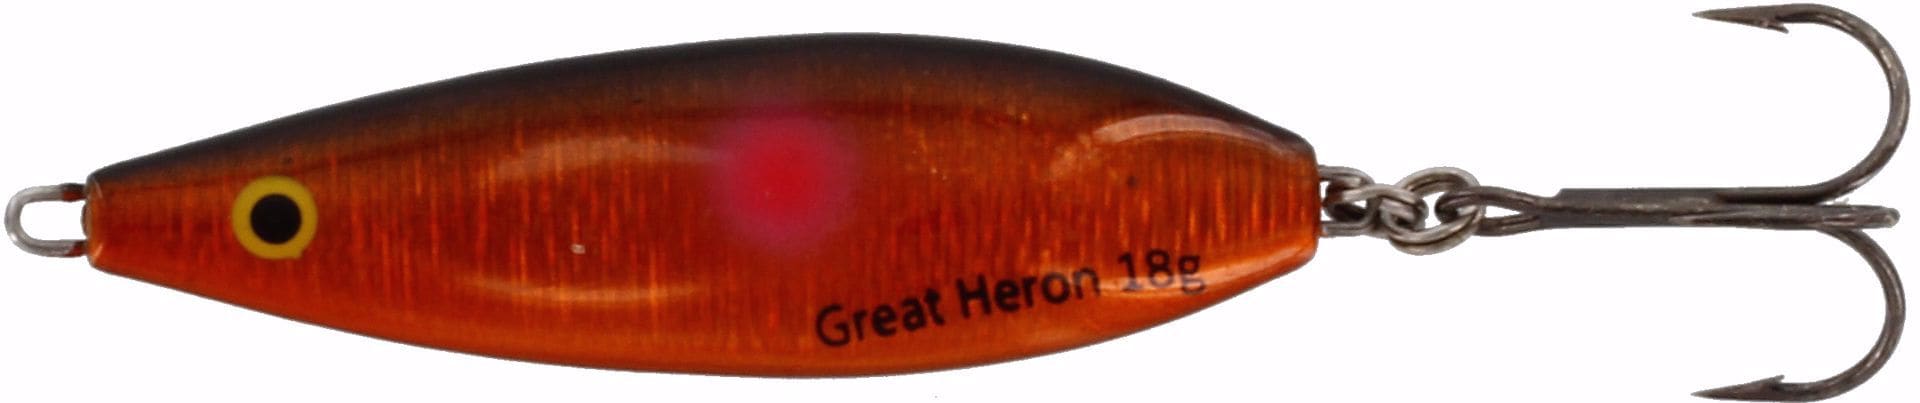 Westin Great Heron 13g Copper Age 5,5cm